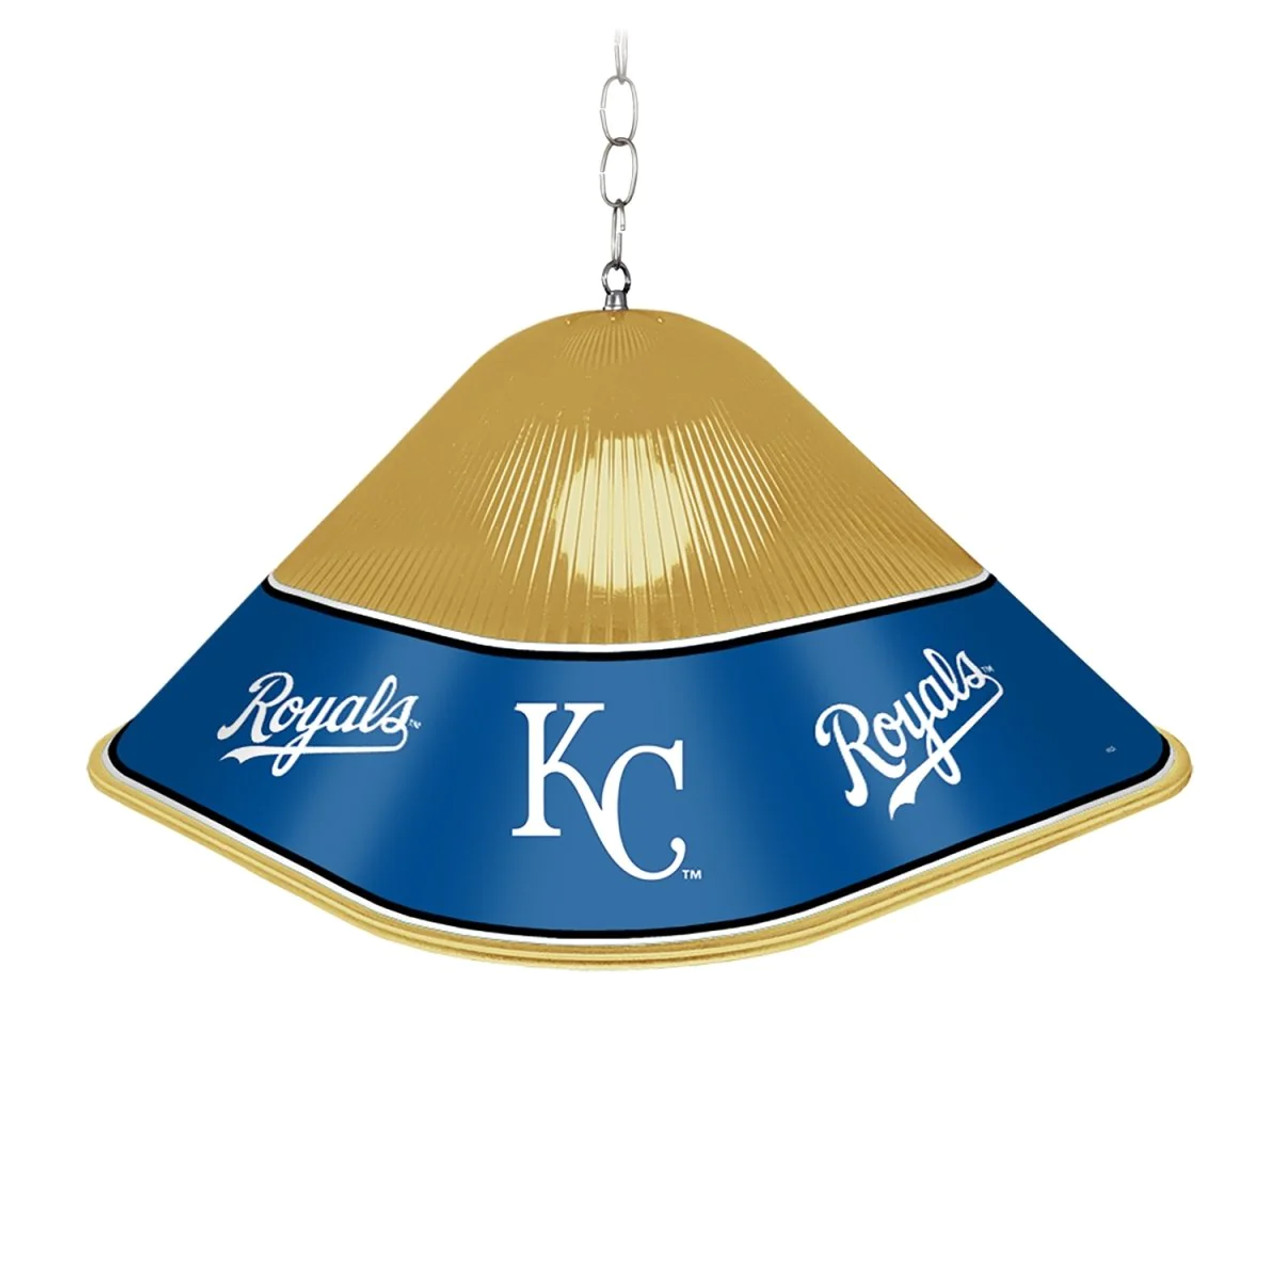 MBROYALS-410-01A, KCR, KC, Kansas City, Royals, KS, Blue/Red  Game  Table  Light  Lamp, MLB, 704384965879